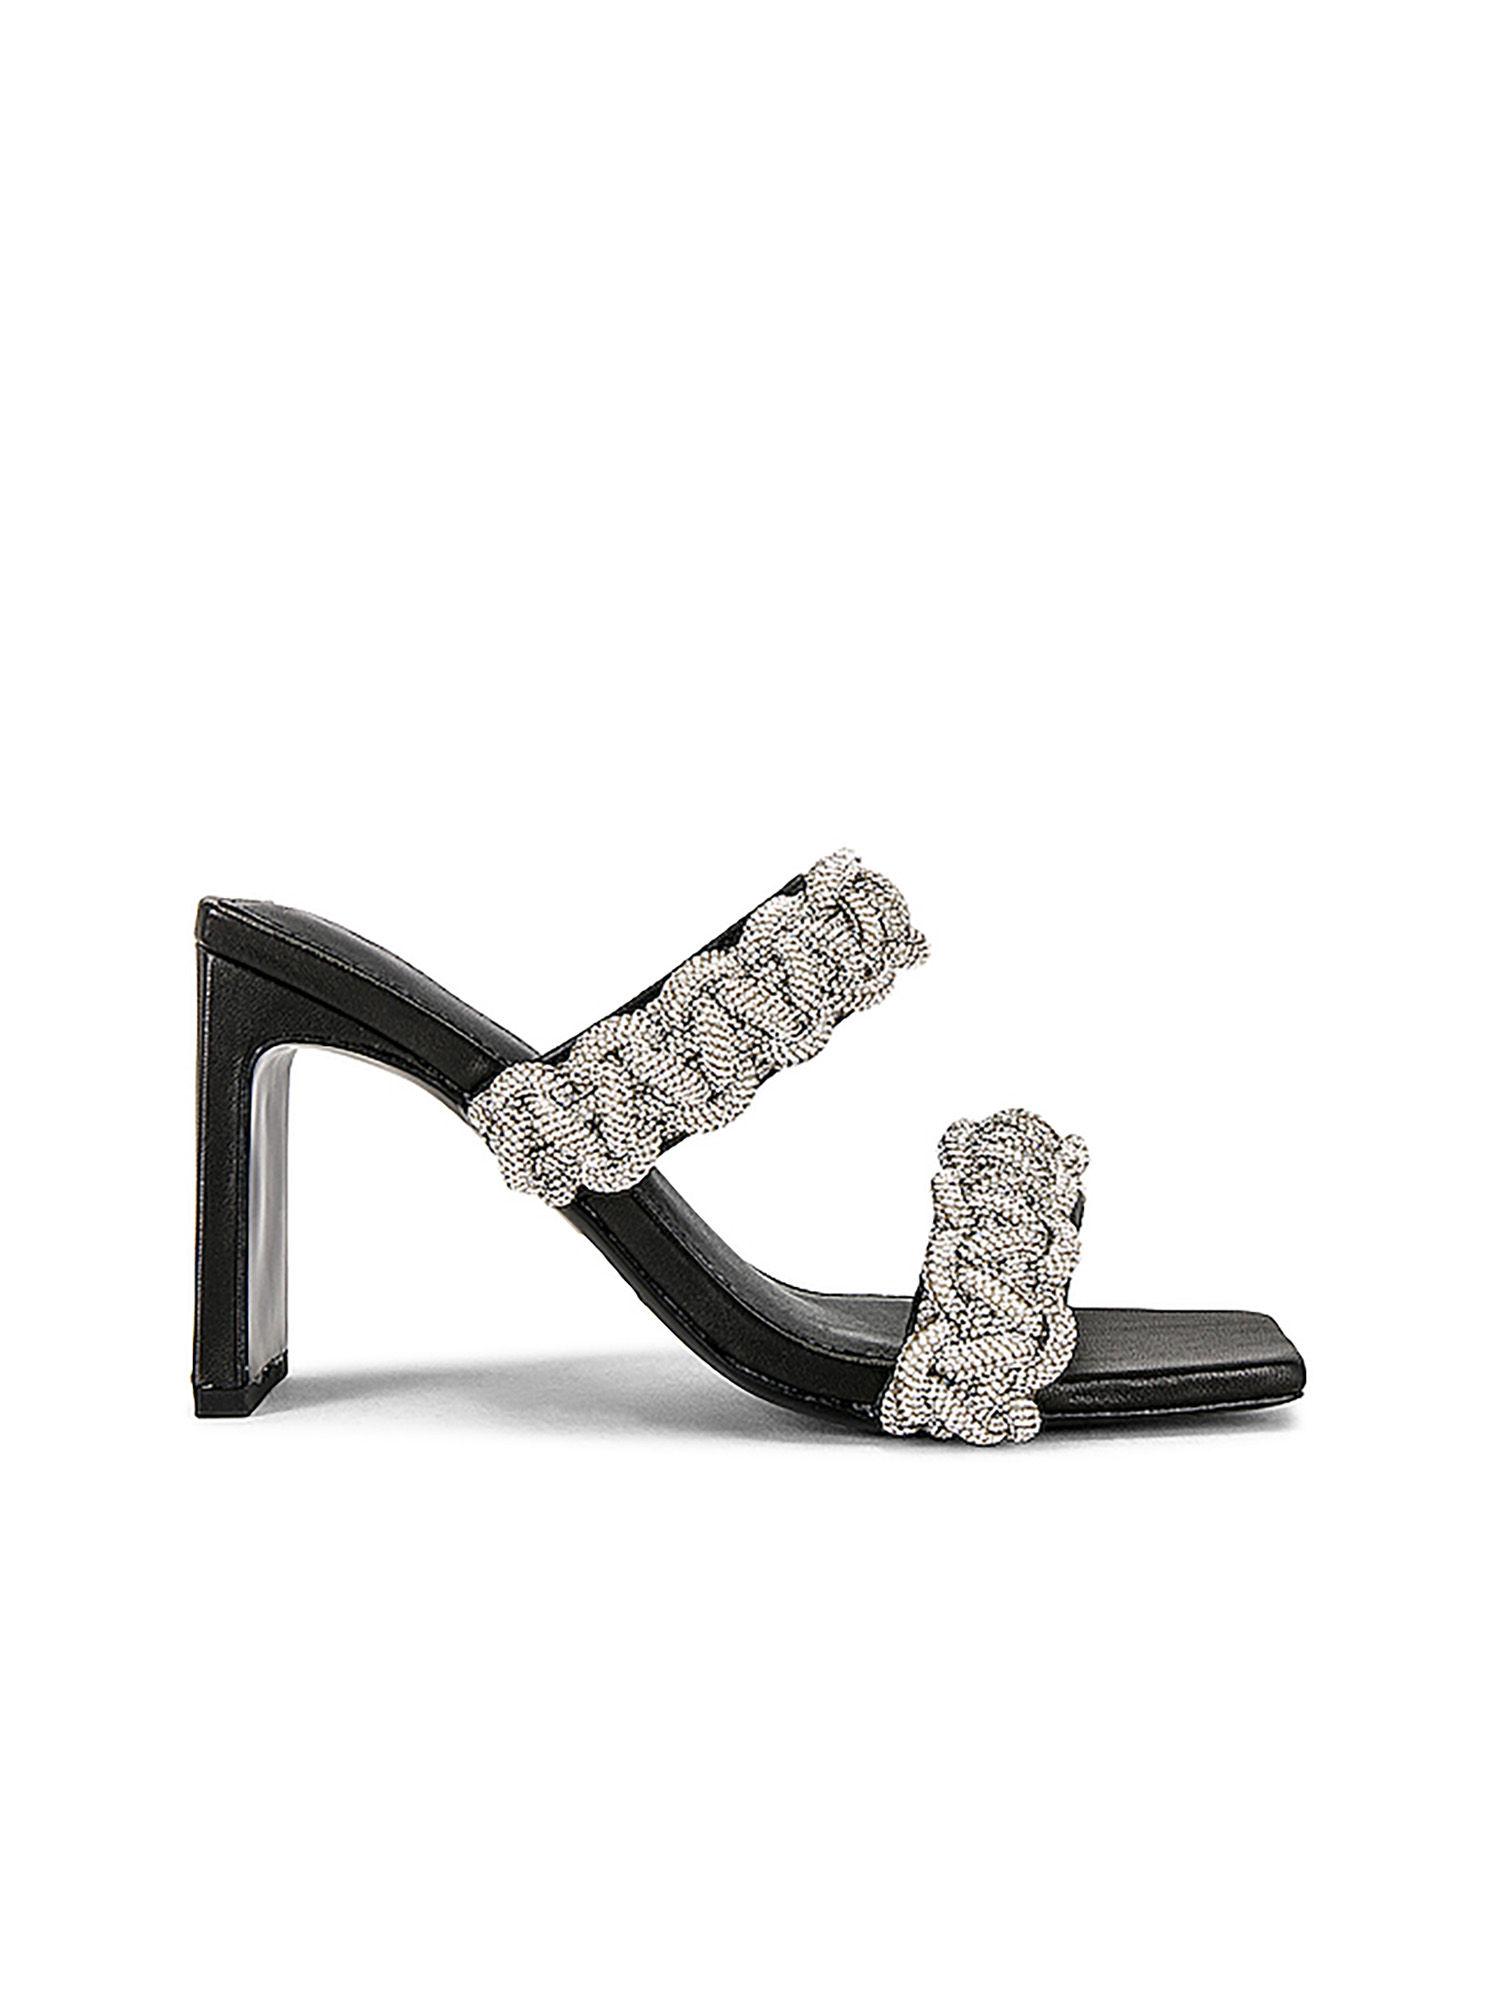 walker crystal rope heeled sandals